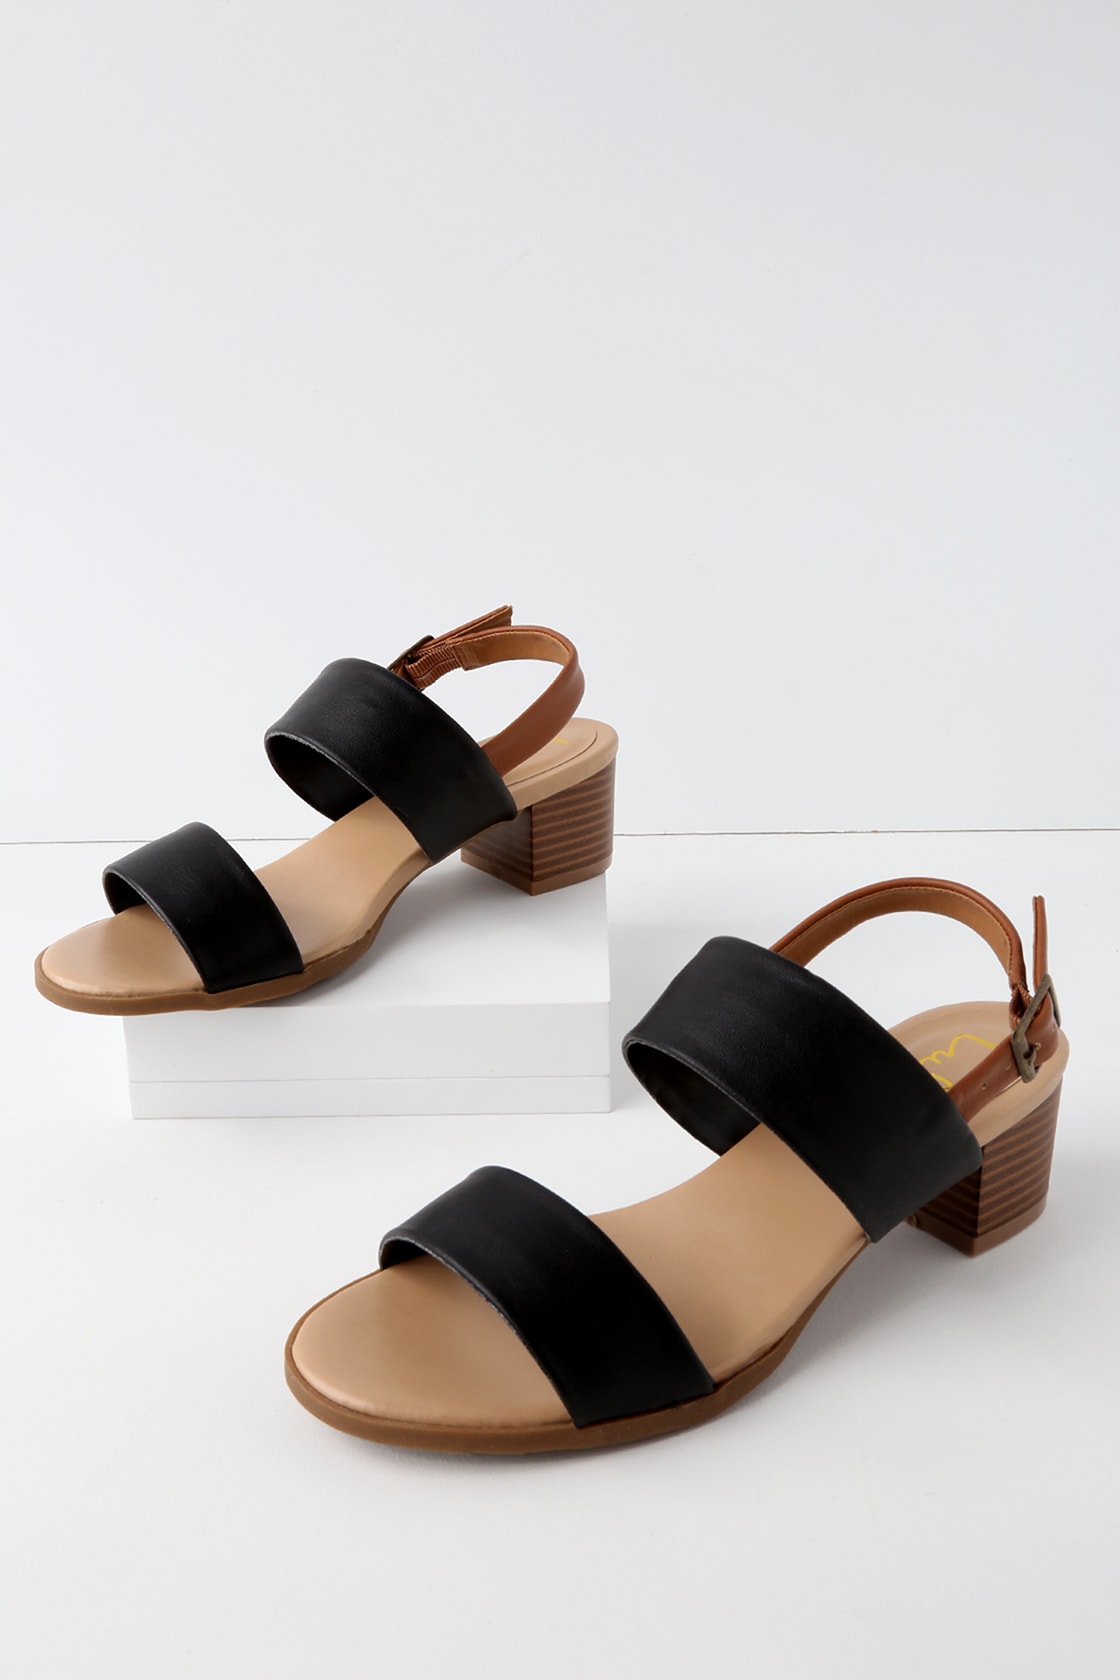 Cute Black Sandals - Vegan Leather Sandals - Buckled Sandals - Lulus